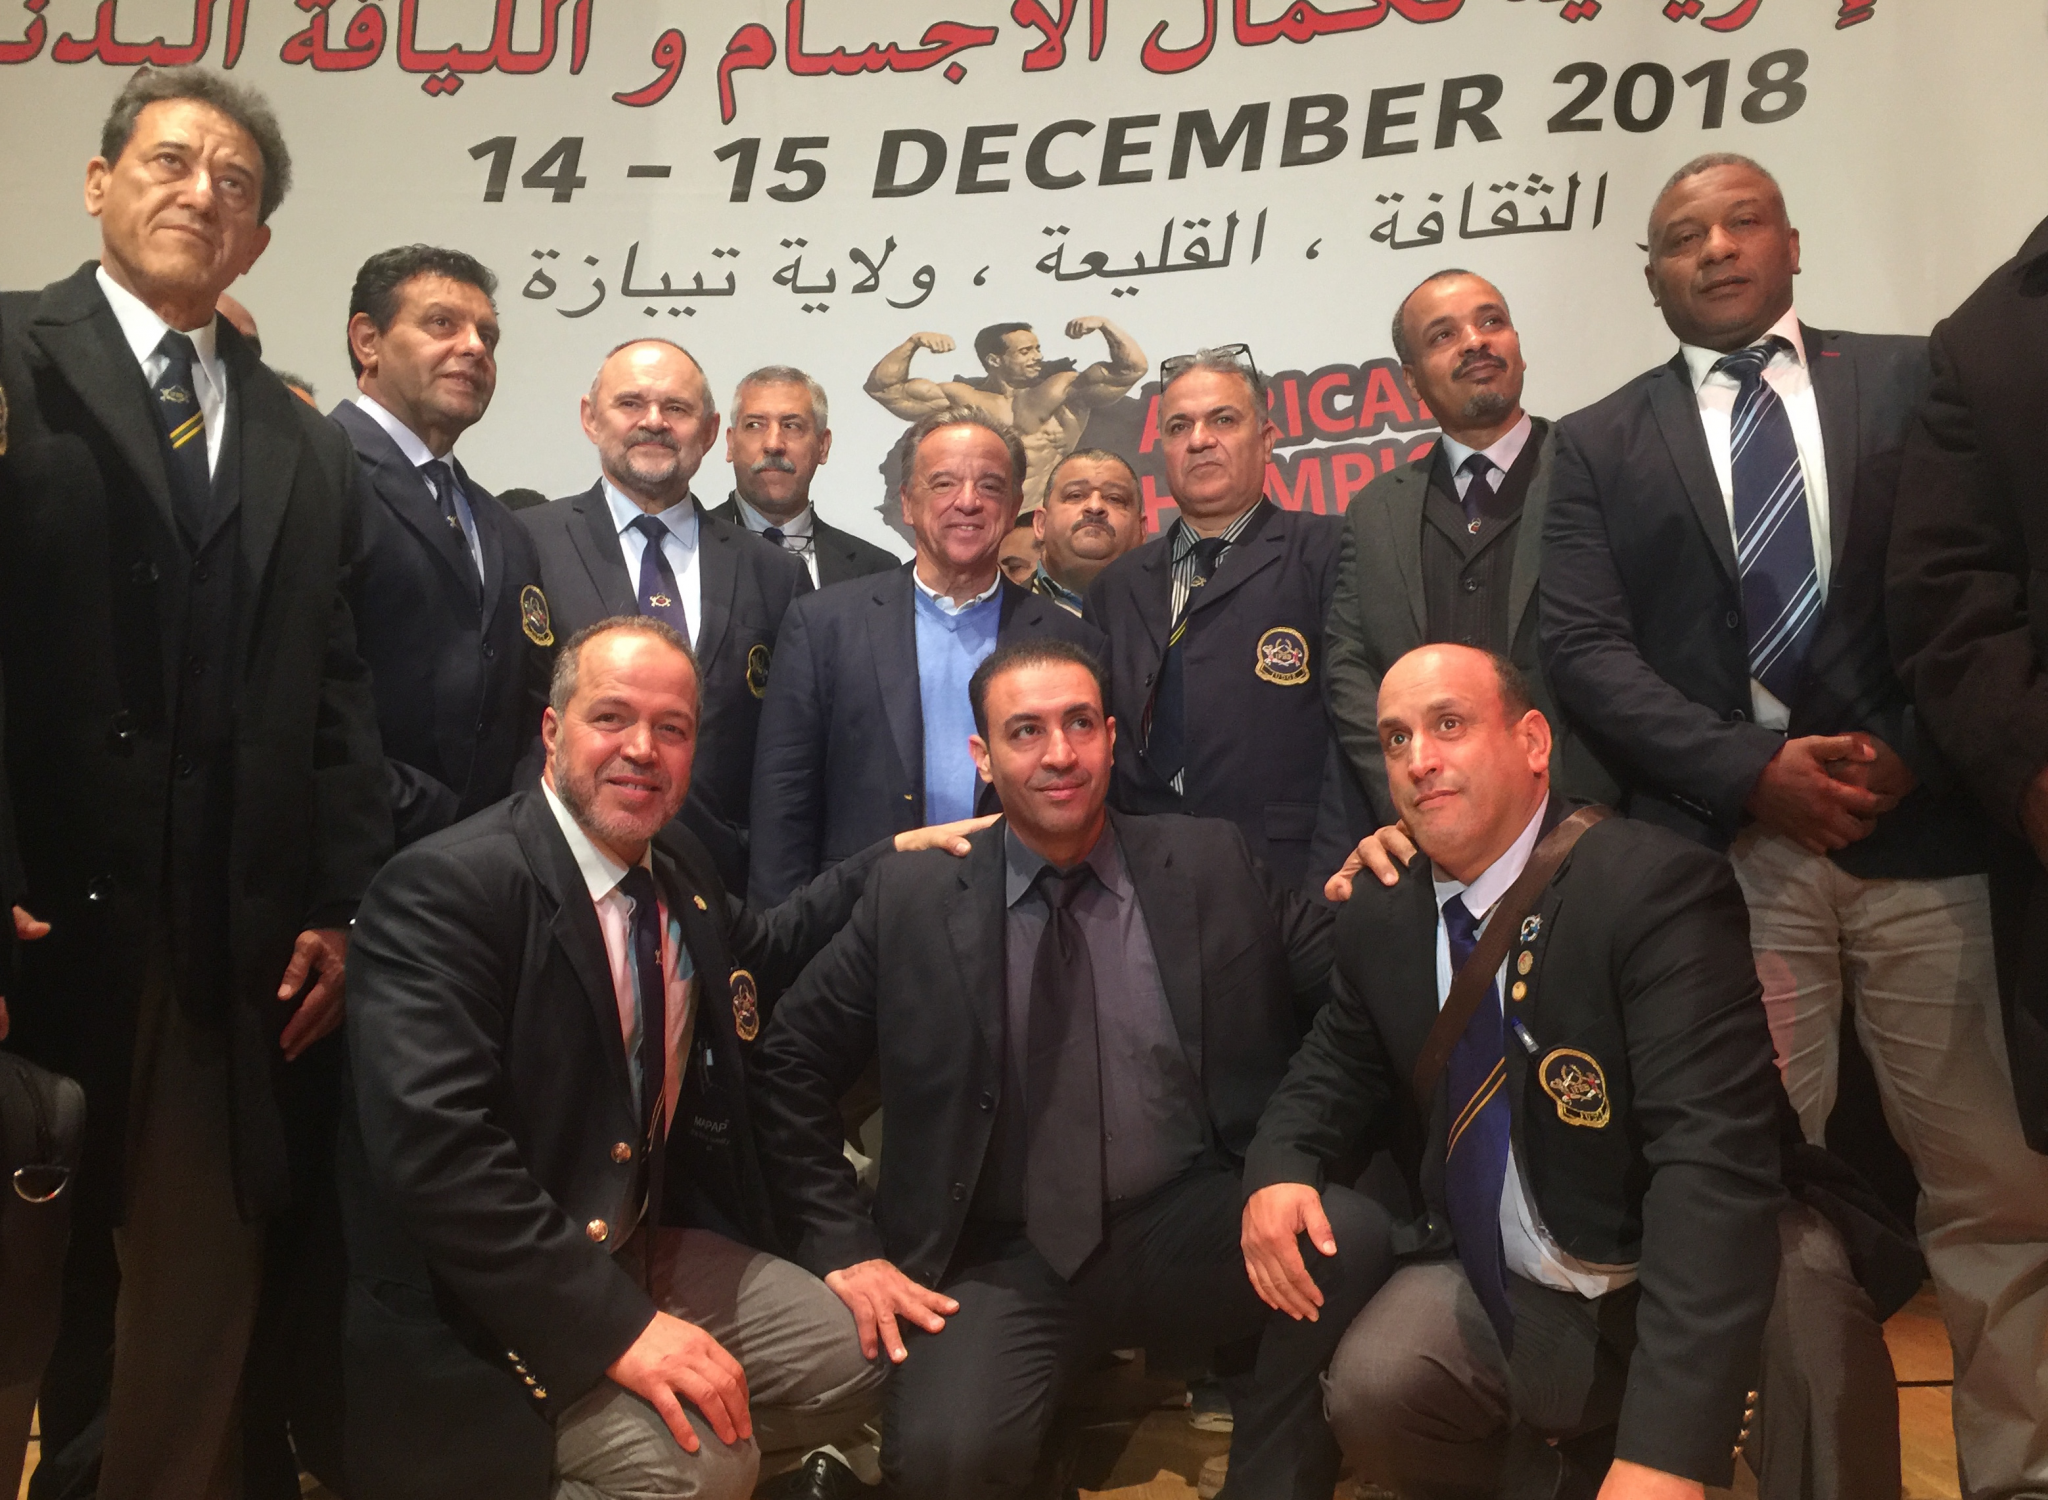 IFBB President Rafael Santonja attended the Championships in Algeria ©IFBB